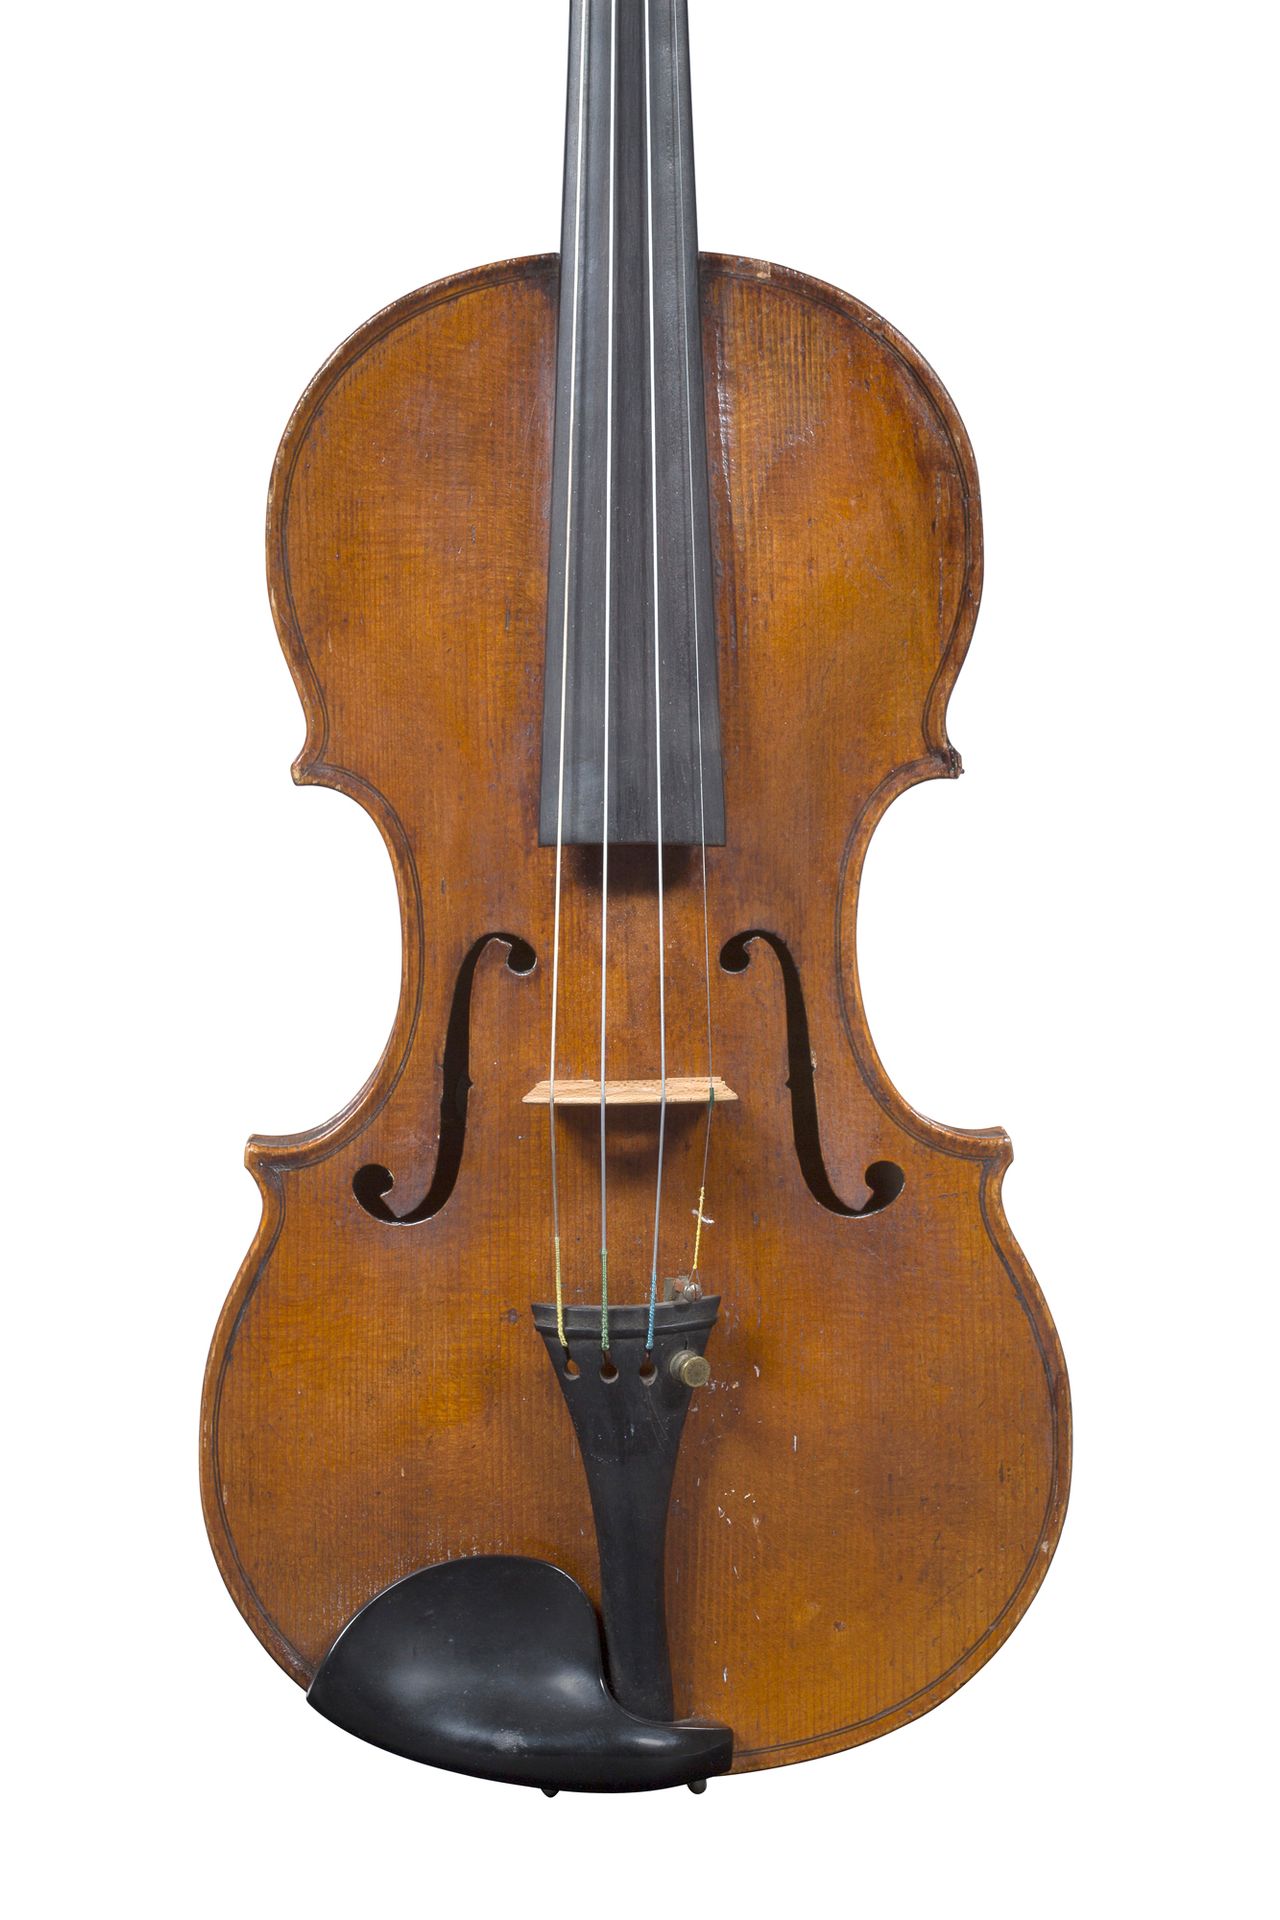 Null 法国小提琴 19世纪
带有巴黎Gand et Bernardel Frères公司的天书标签
台面、右上角和右上角夹板上有修复痕迹 
背面有357毫米